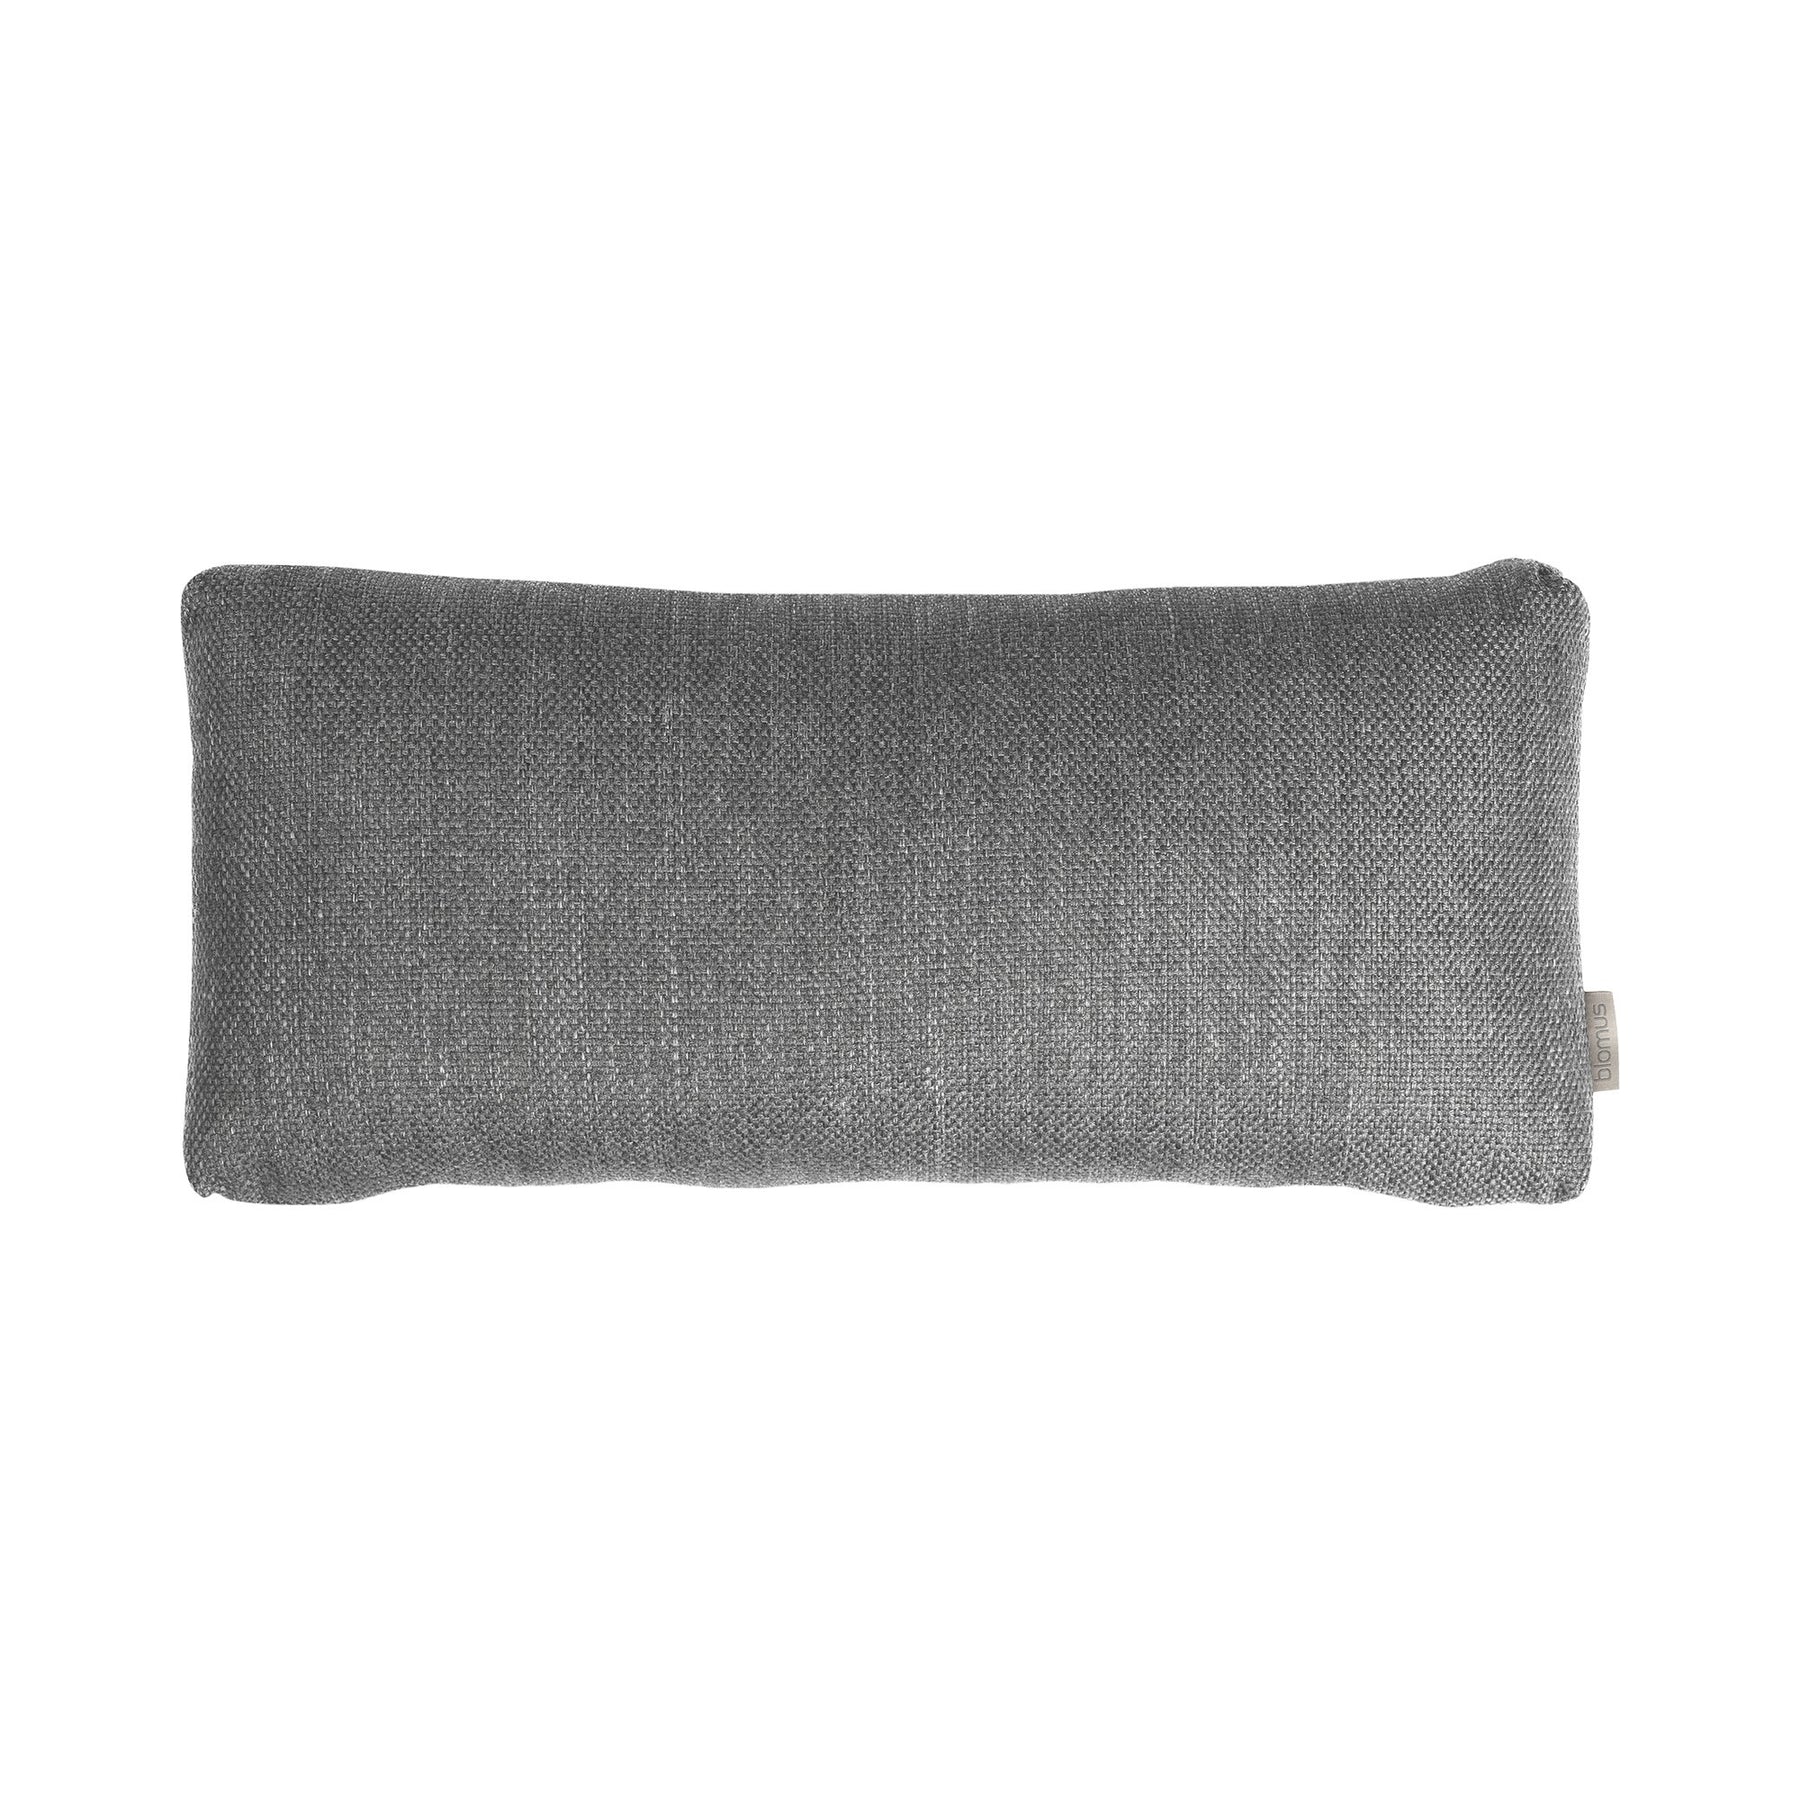 GROW Cushions For Outdoor Patio Furniture Coal (dark grey)